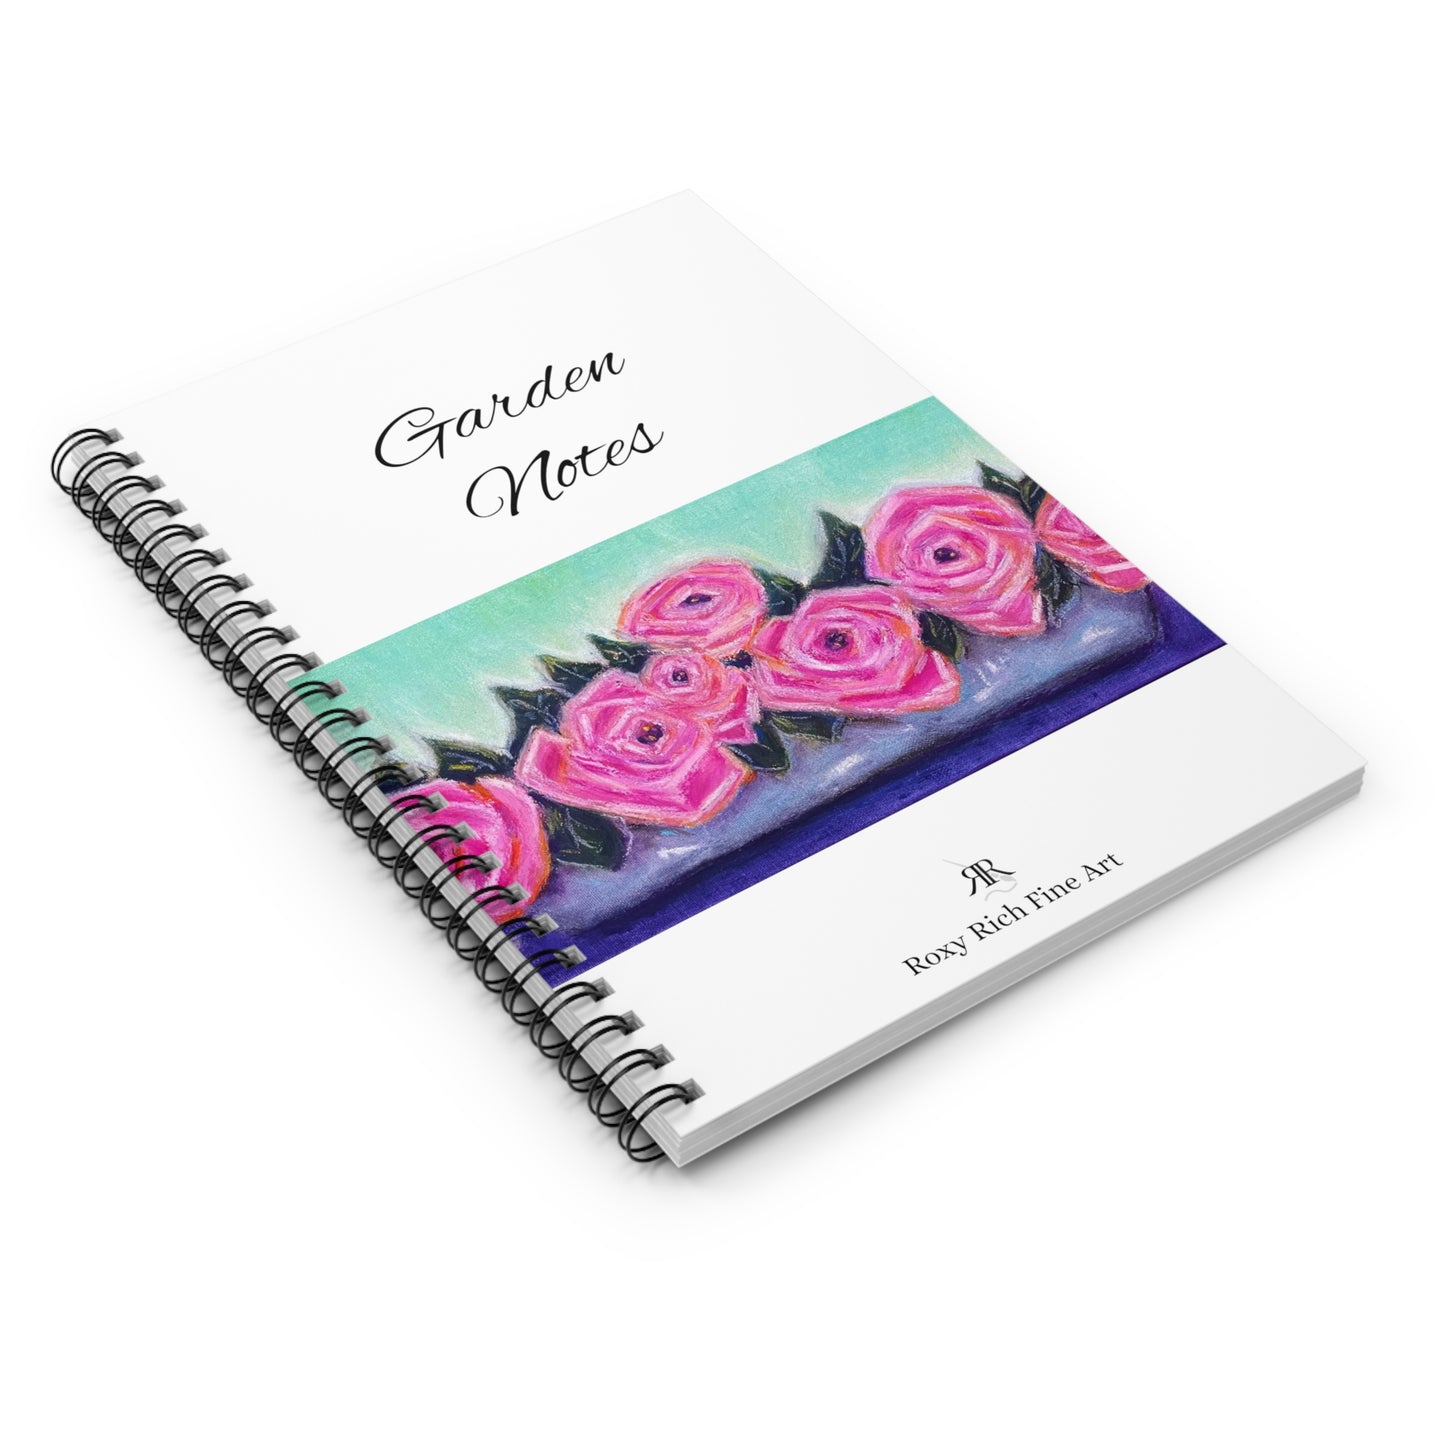 Garden Notes "Tin Full of Roses" Spiral Notebook